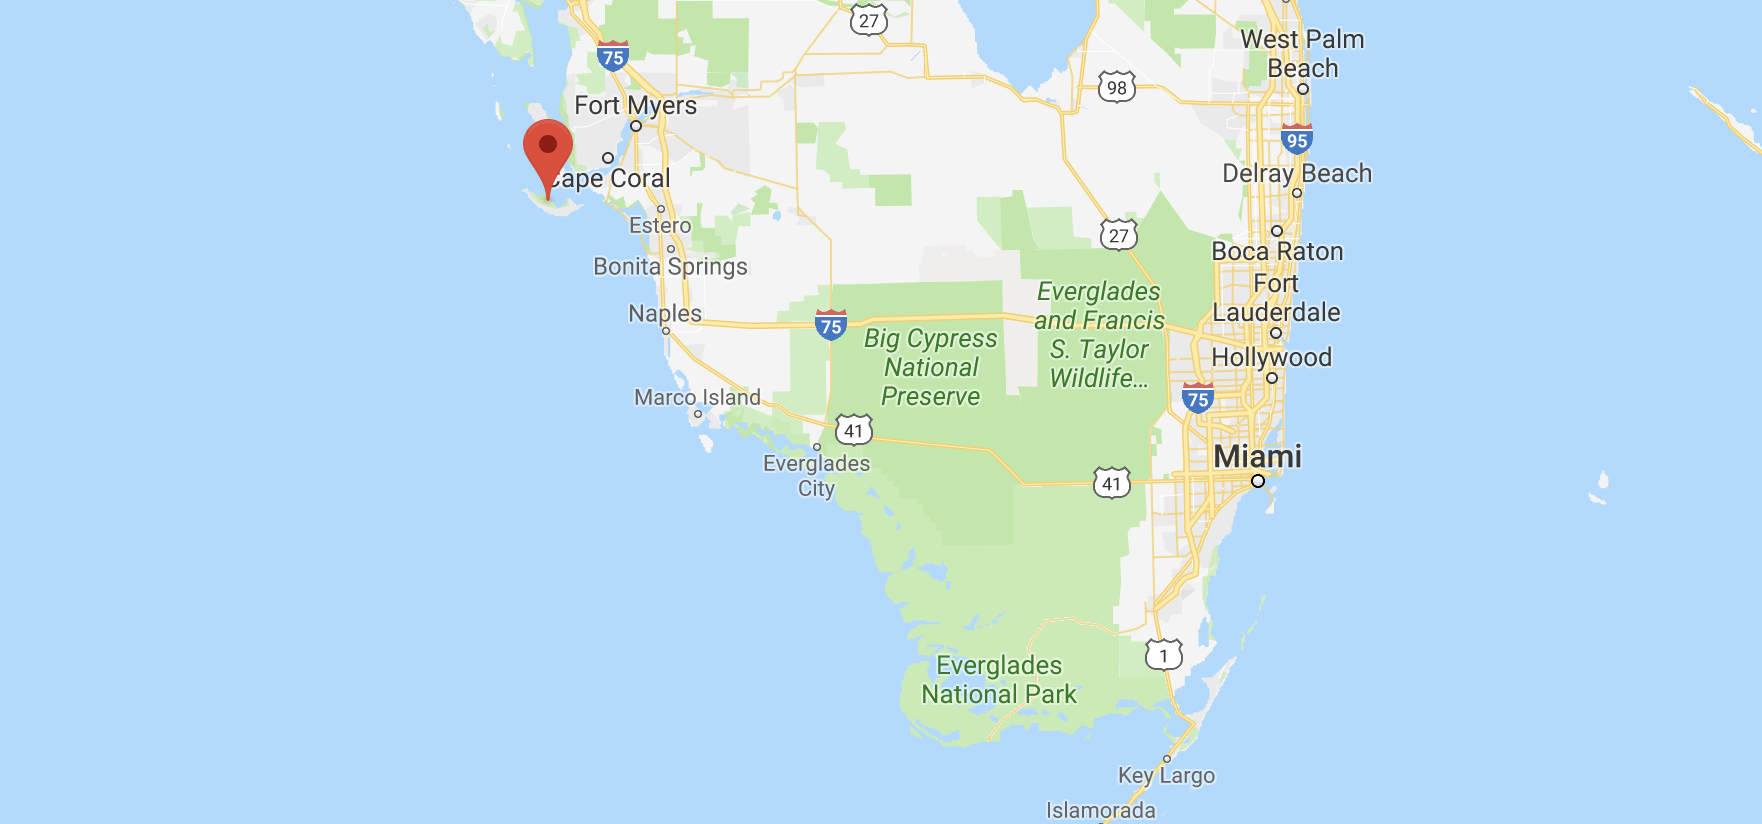 Sanibel Island FL Location On Map Island Inn Sanibel